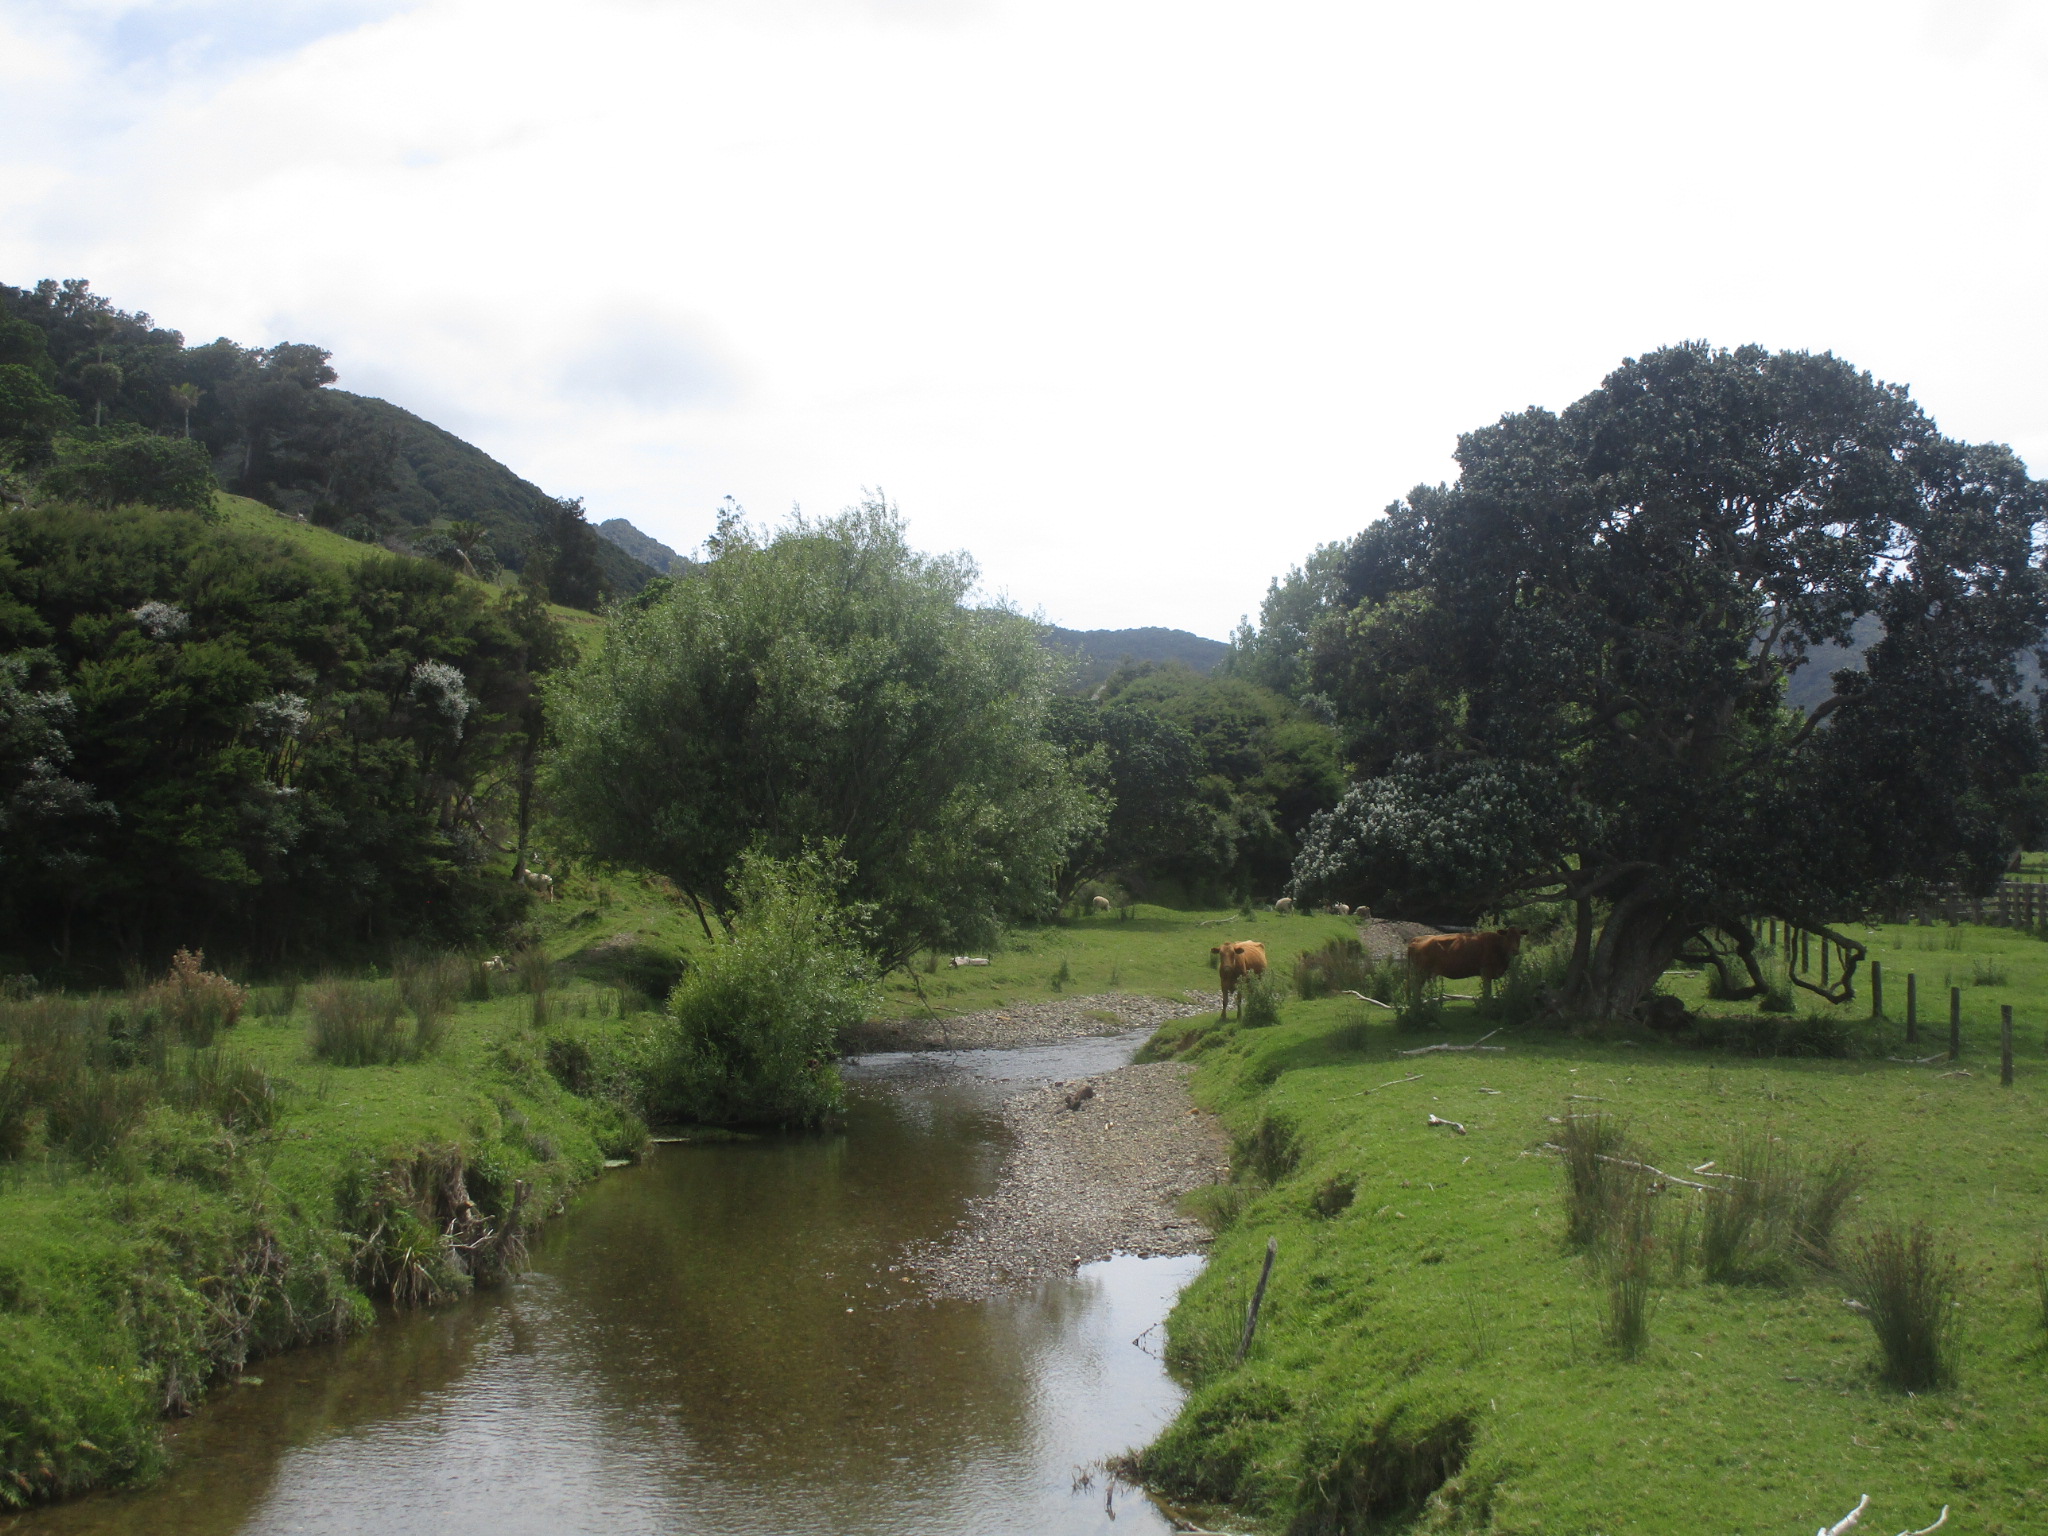 Coromandel cows by the river